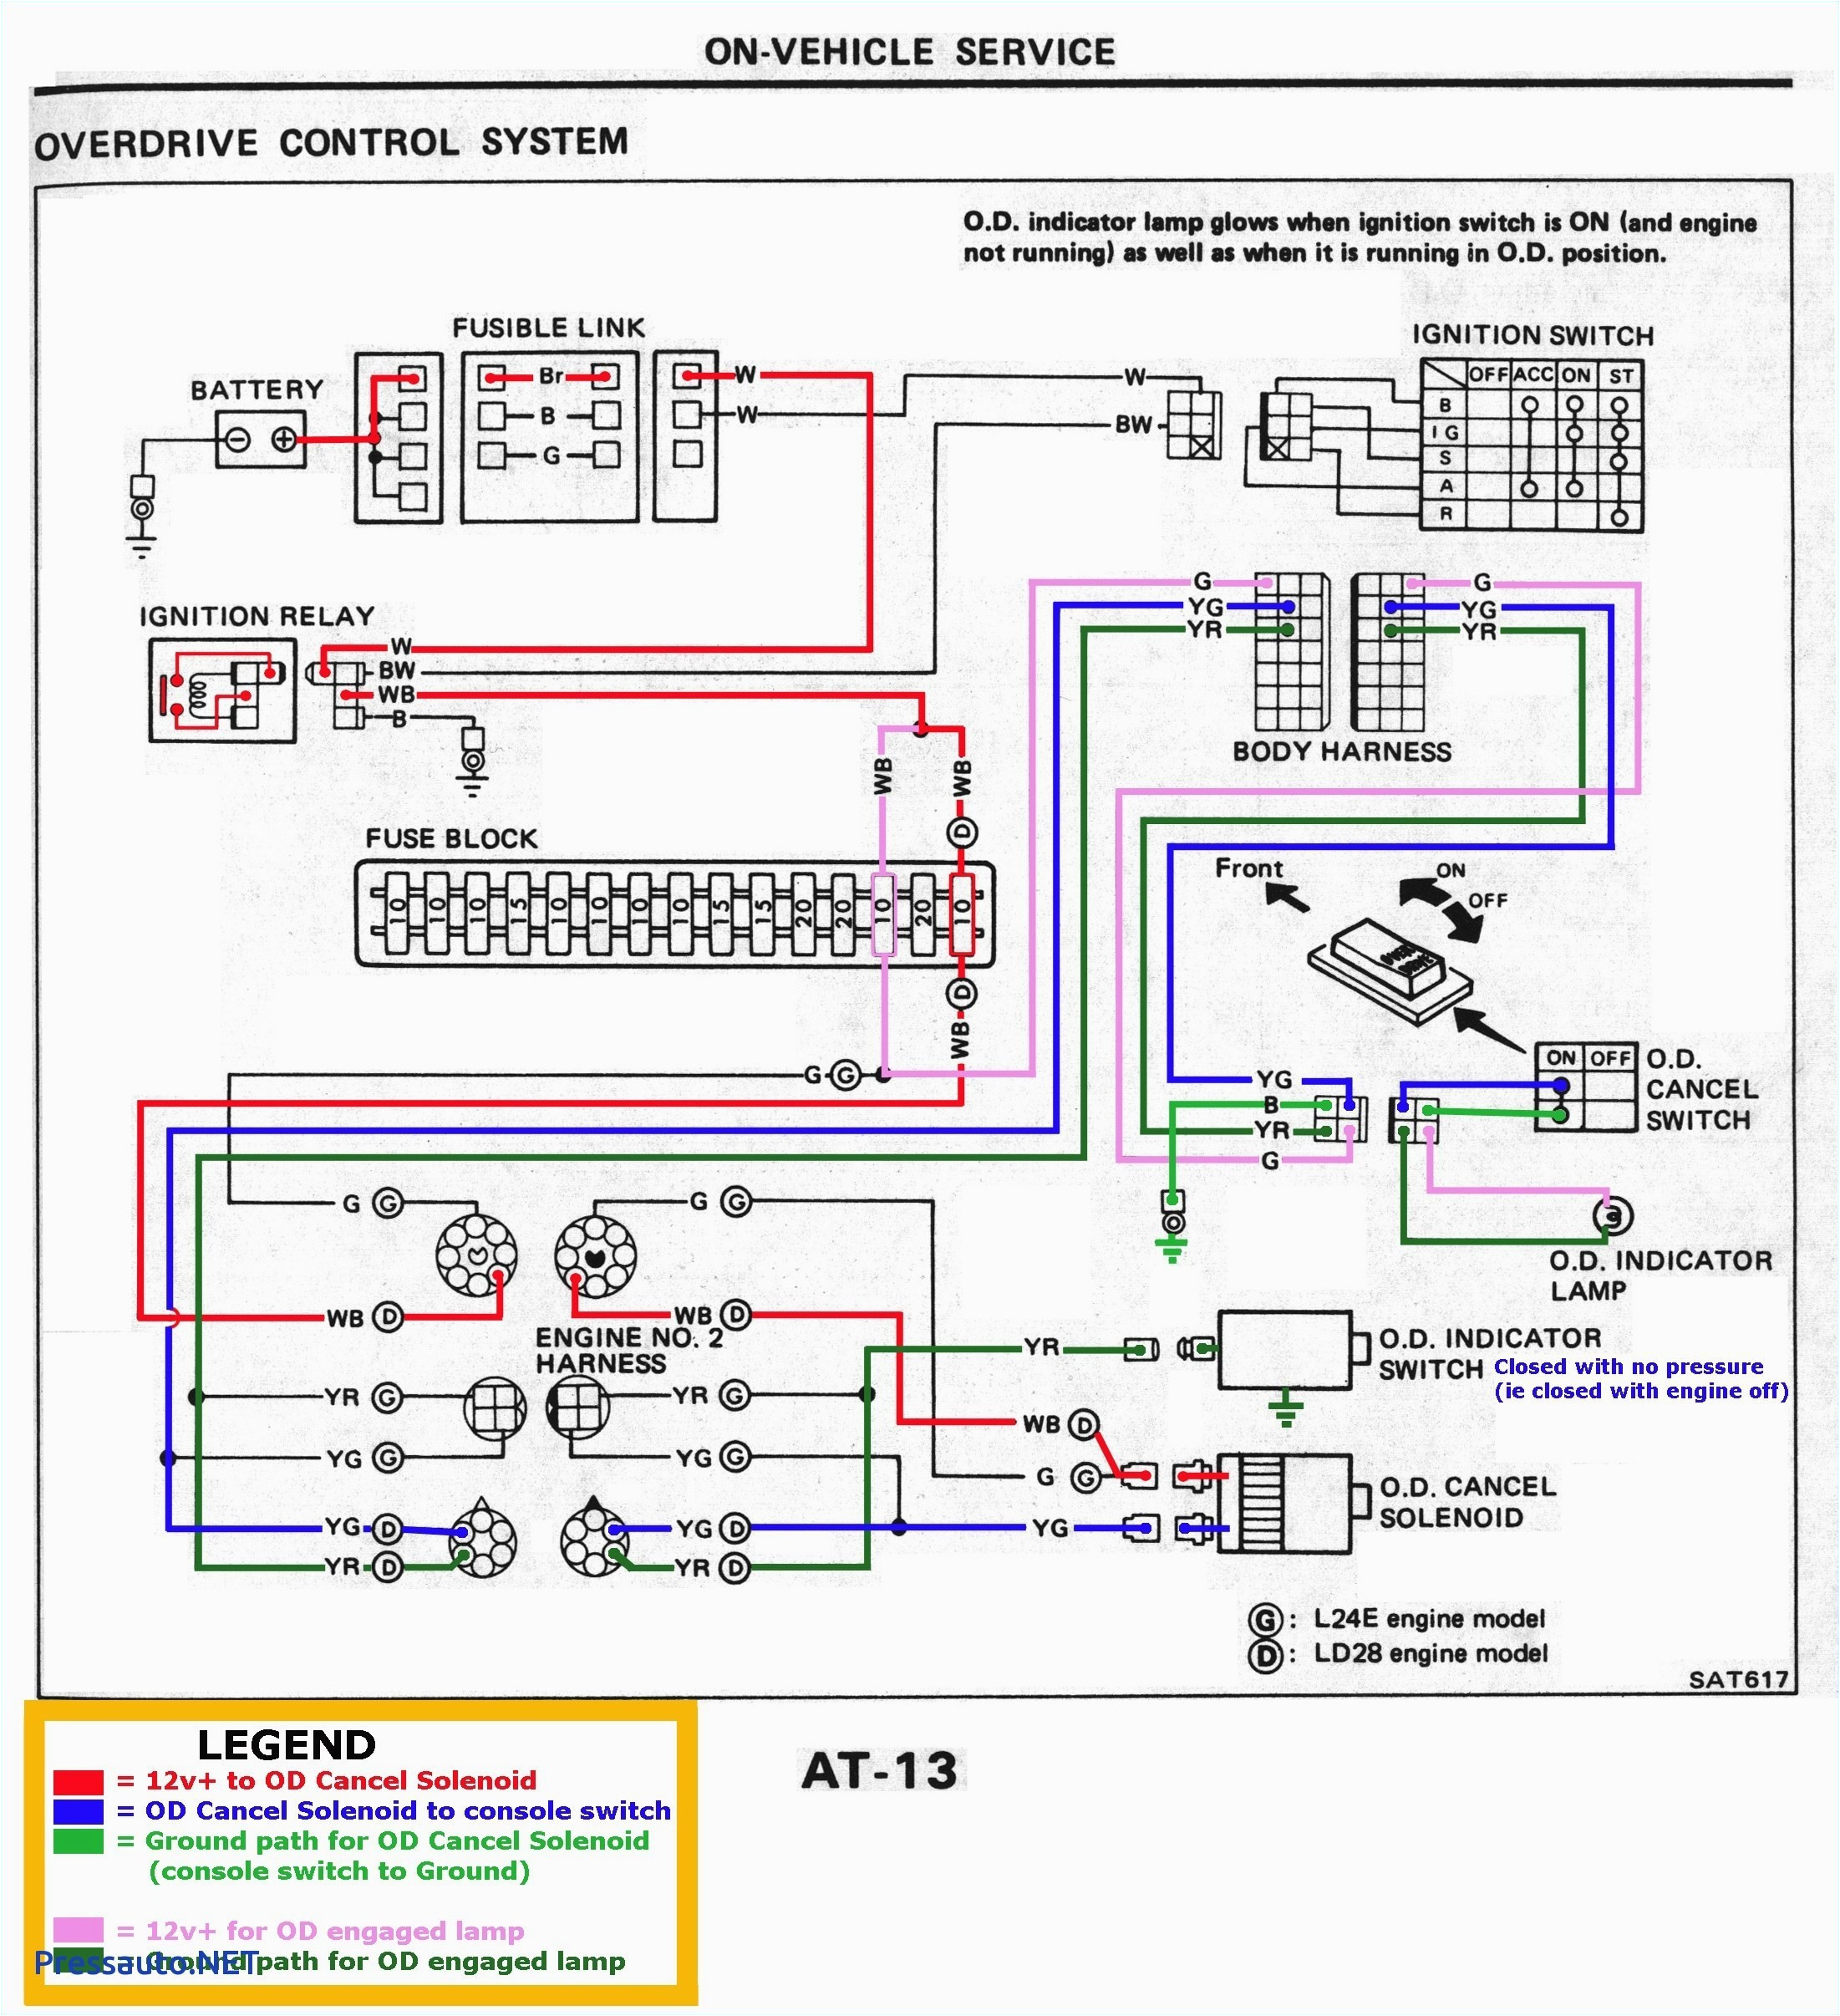 wiring diagram for pioneer deh 6400 wiring diagram article reviewwiring diagram for pioneer deh 6400 wiring